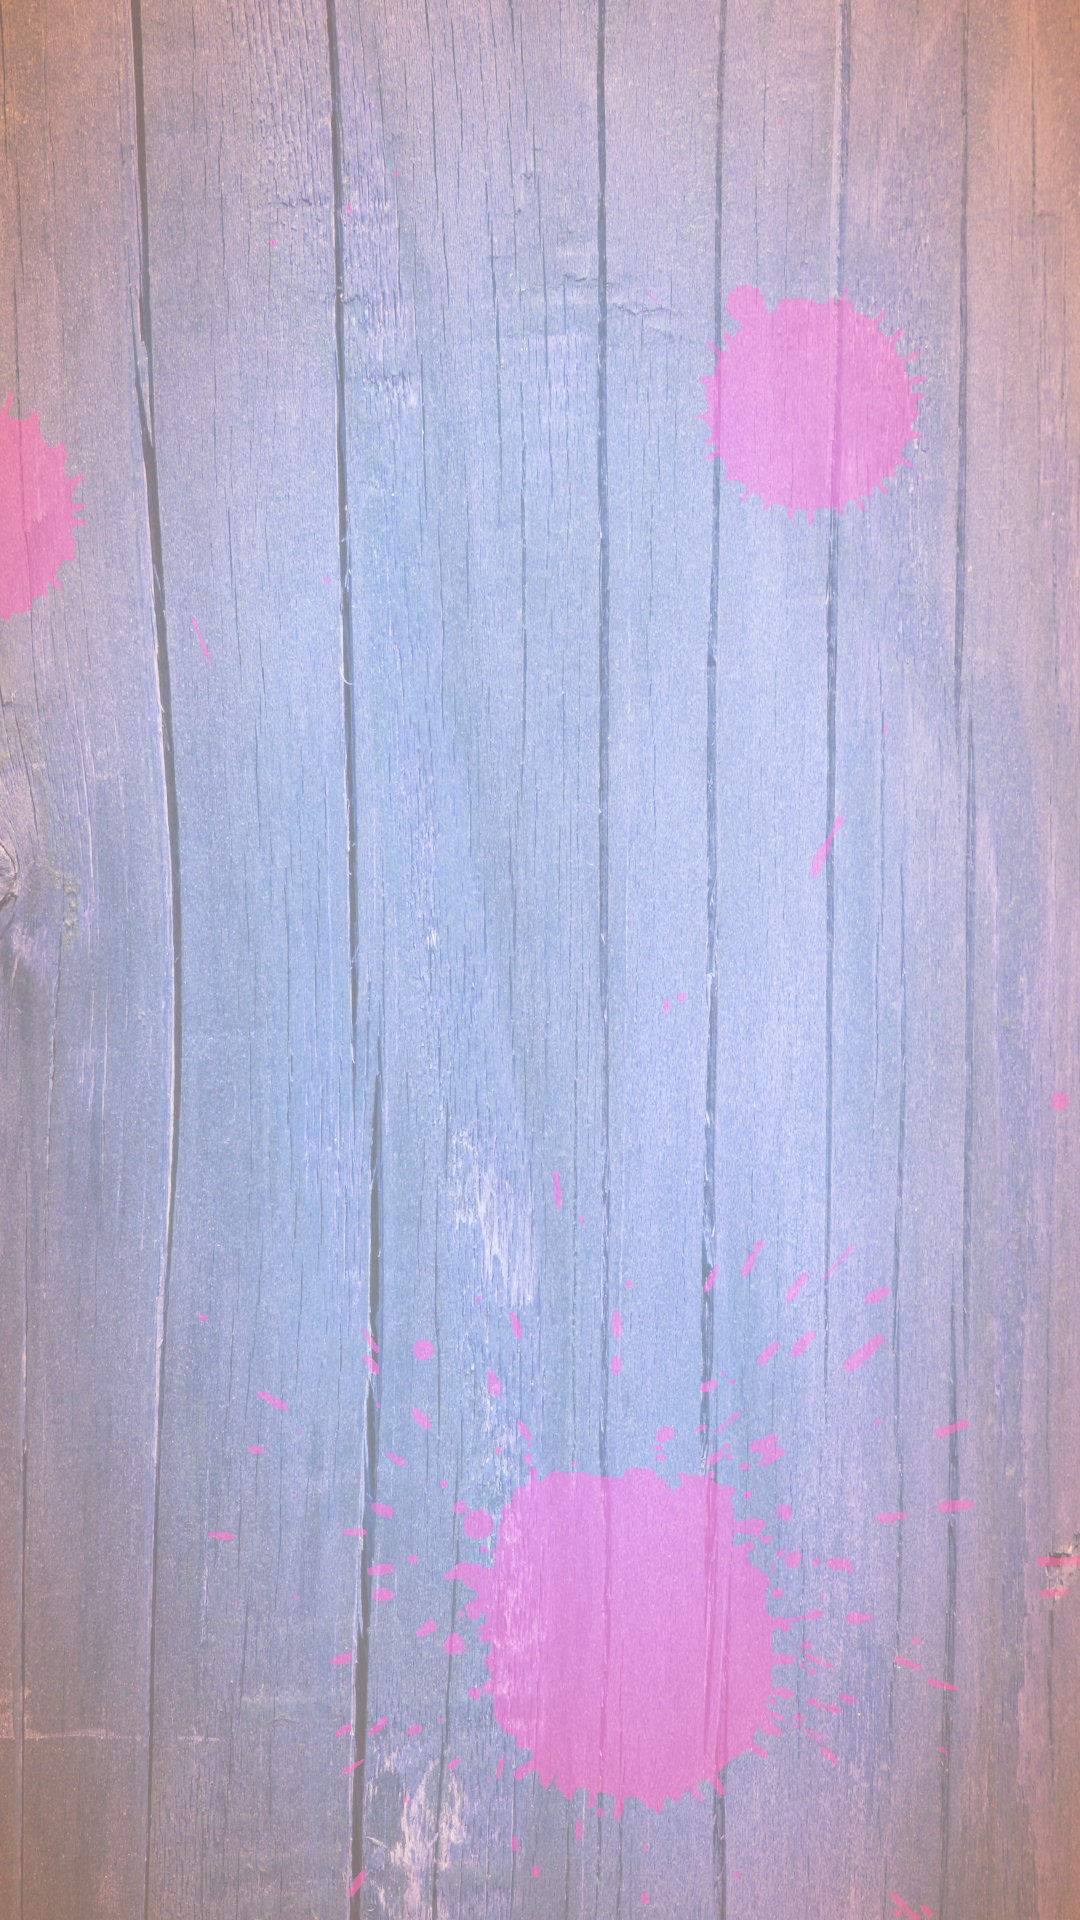 wallpaper warna coklat,pink,magenta,textile,material property,wood